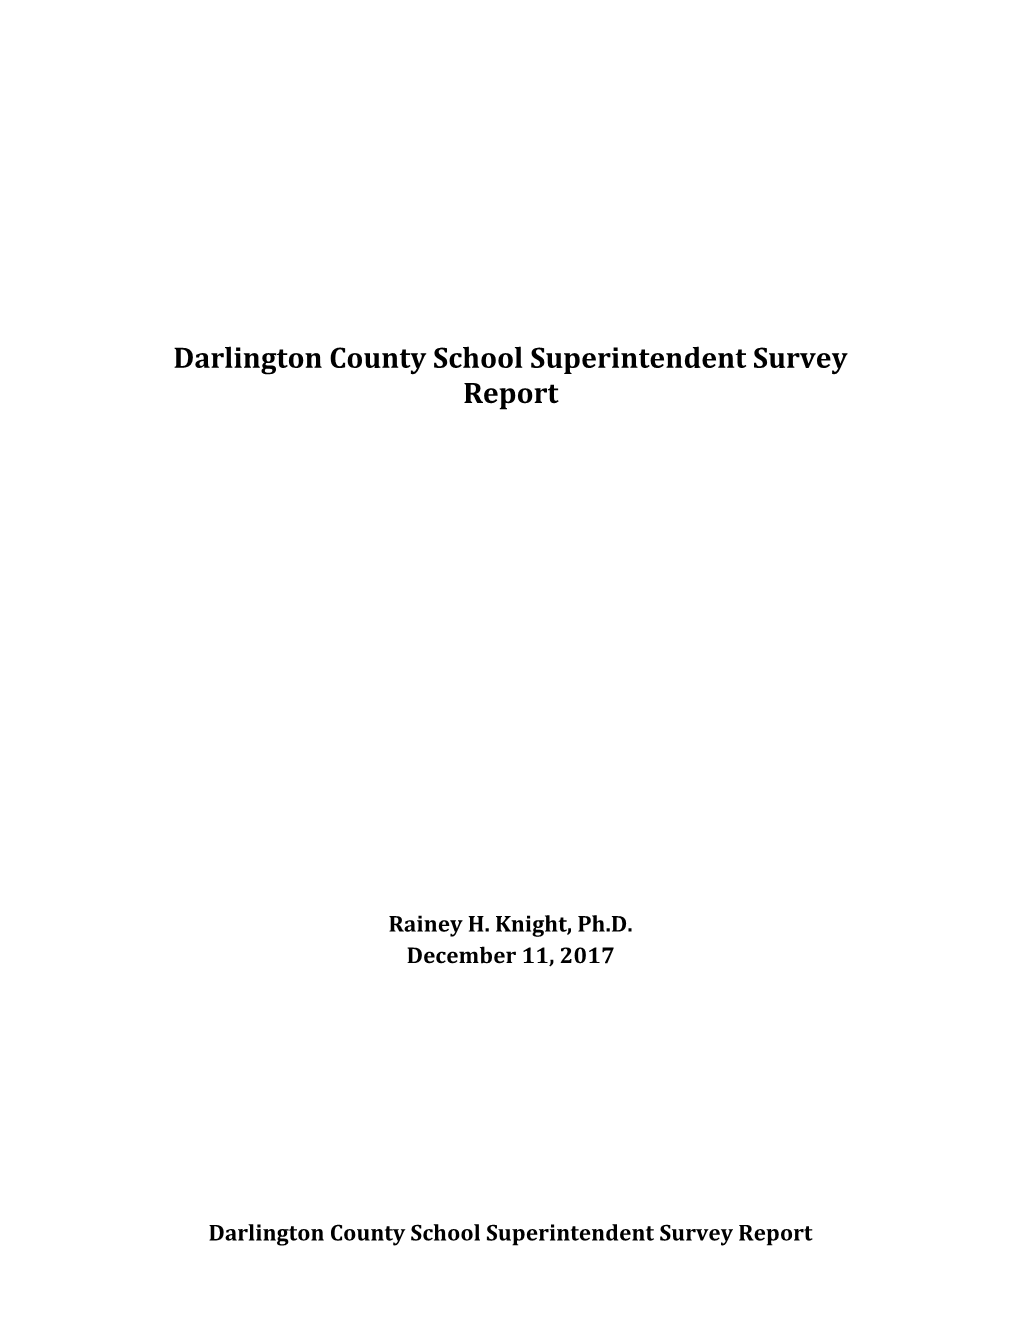 Darlington County School Superintendent Survey Report